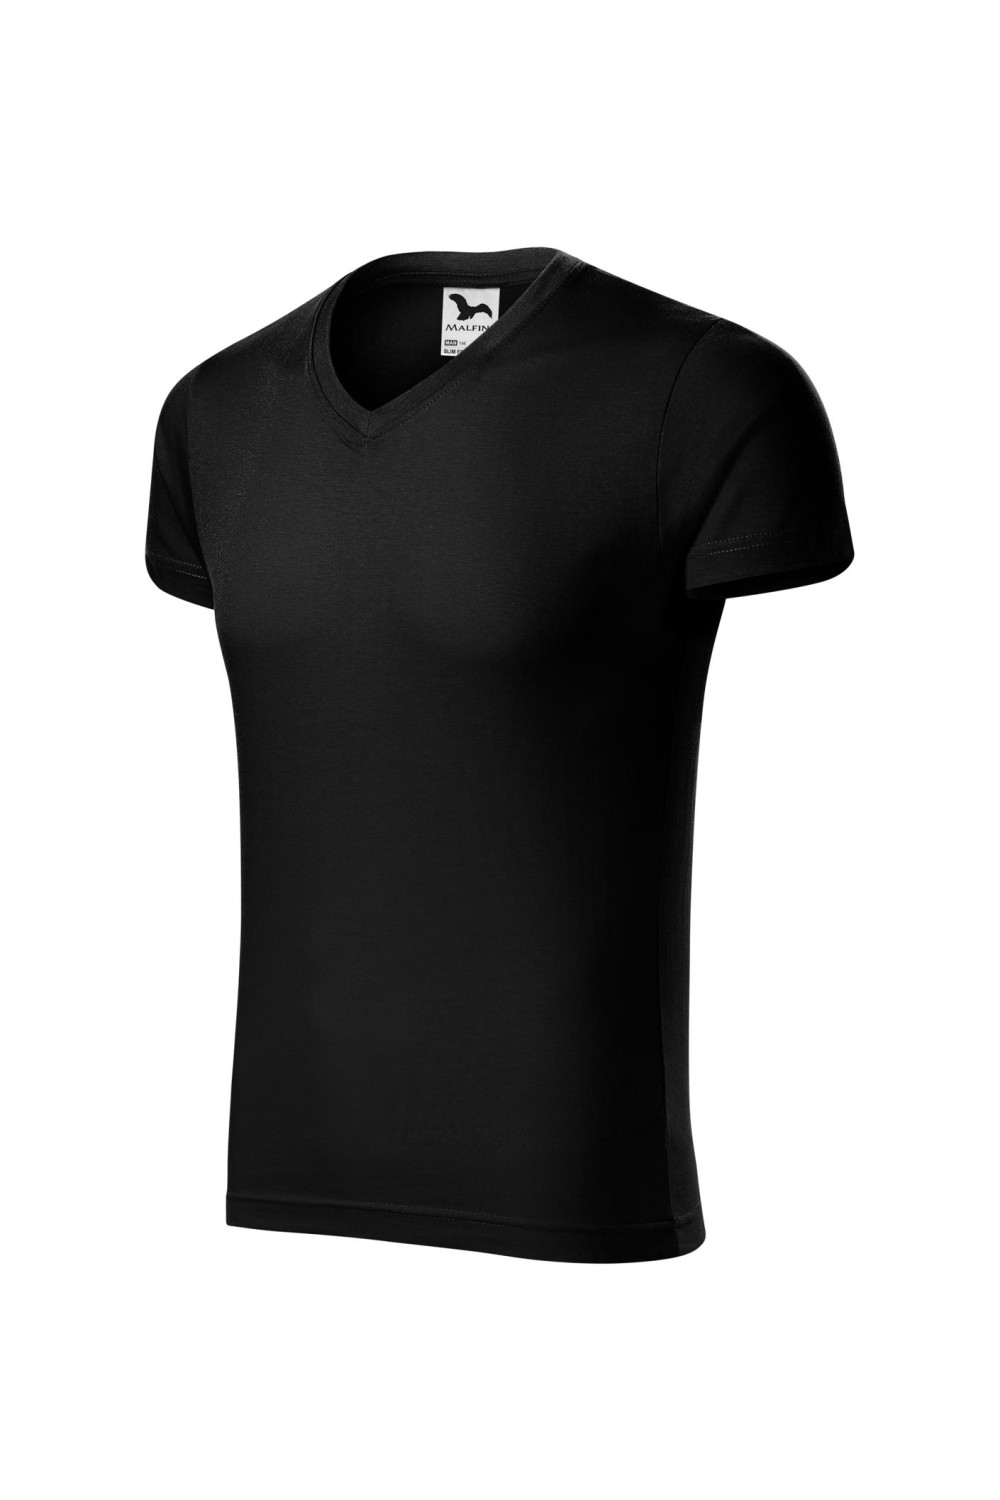 Koszulka męska 100% bawełna t-shirt SLIM FIT V-NECK 146 kolor czarny